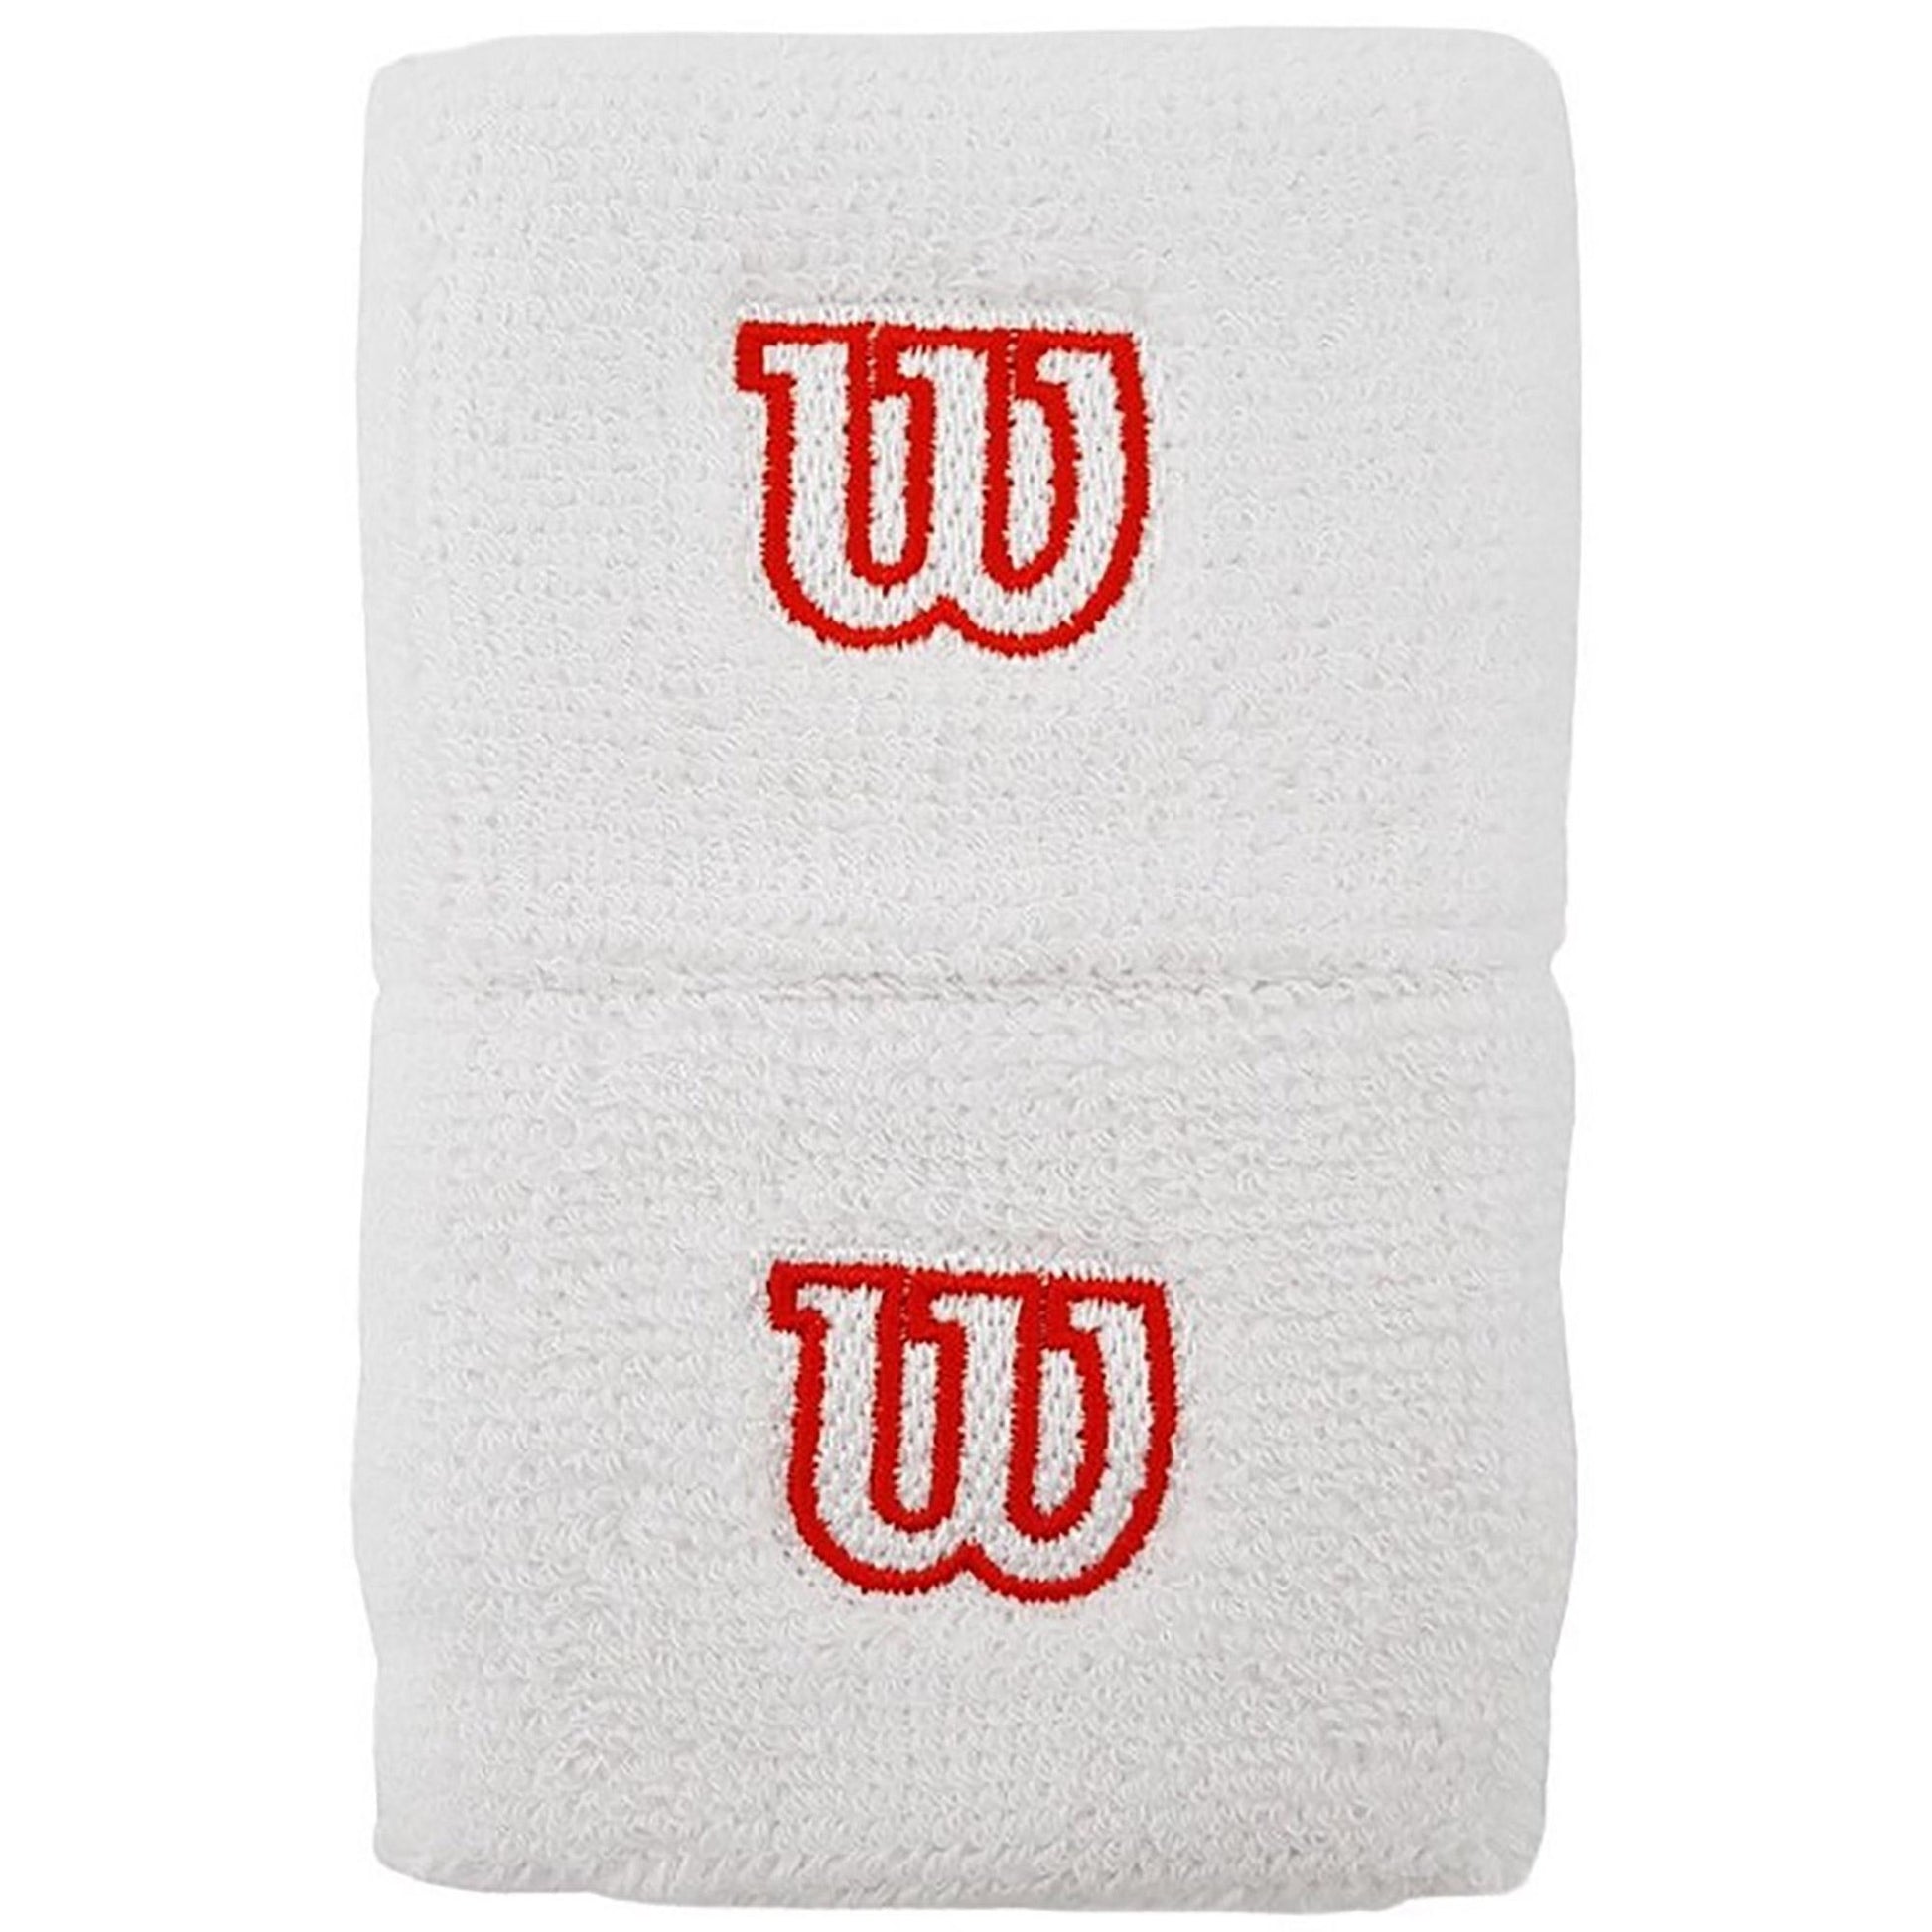 Wilson Logo Wristband 2-pack